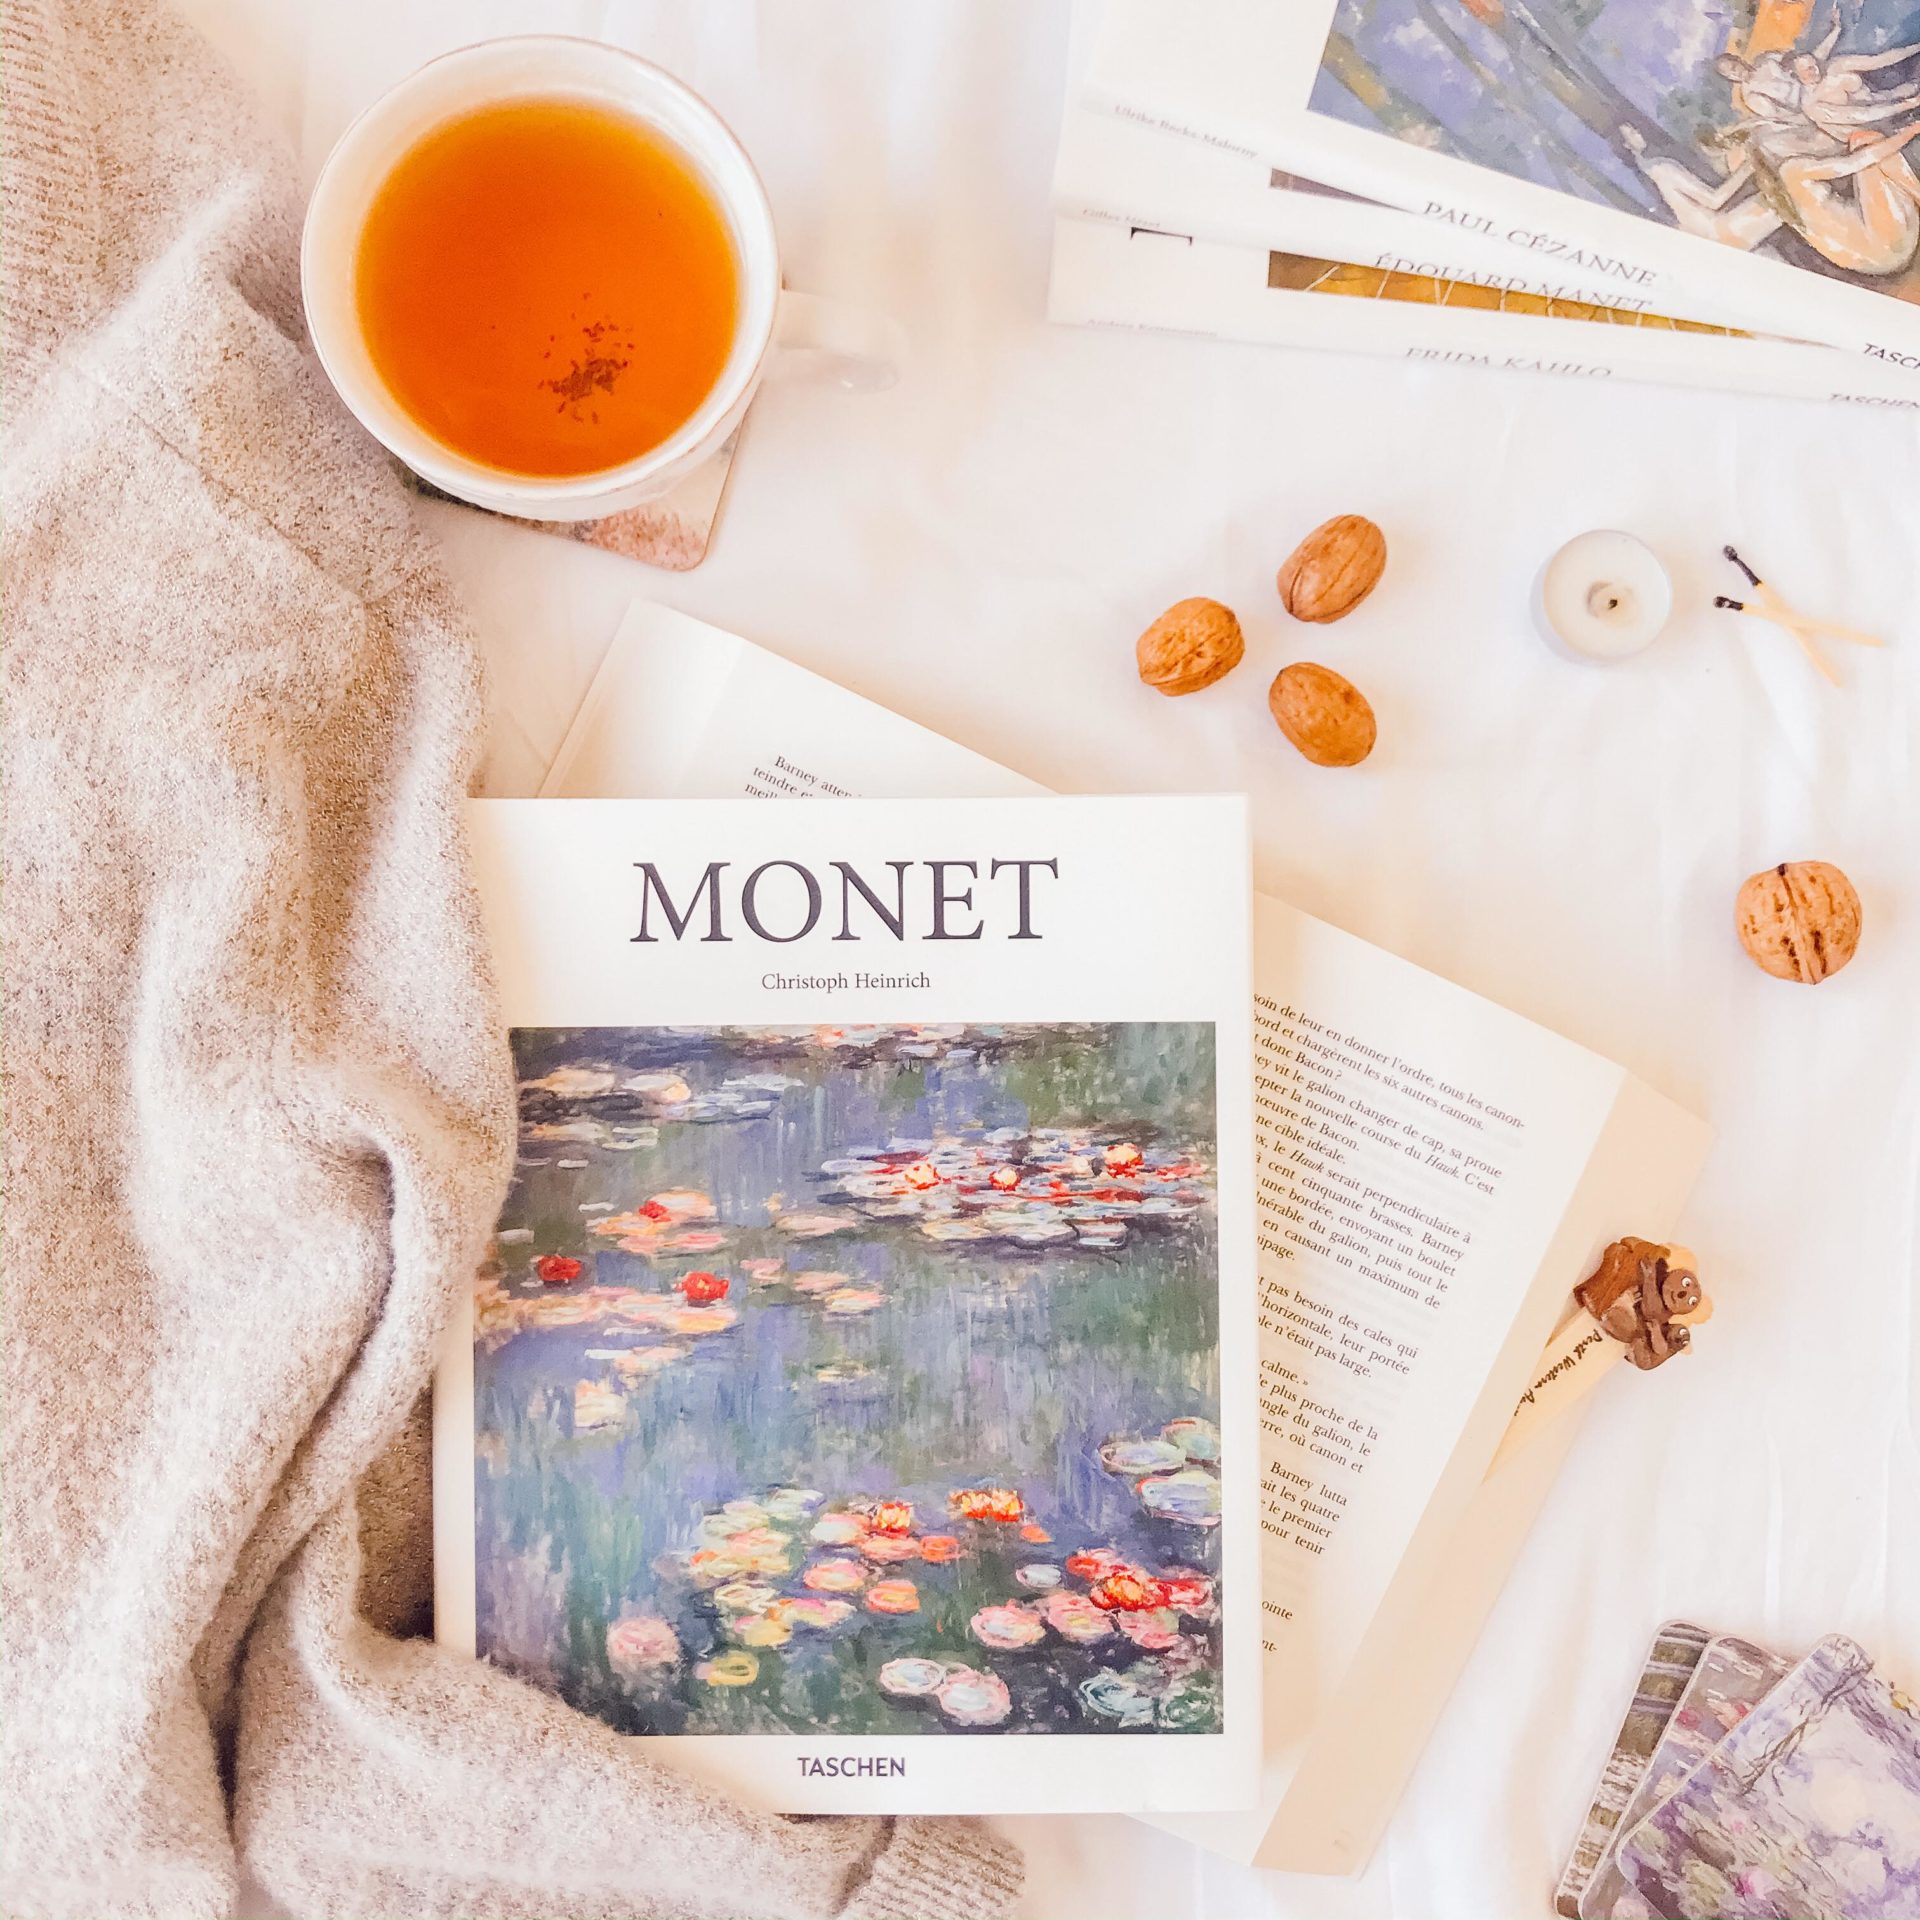 Claude Monet by Christoph Heinrich